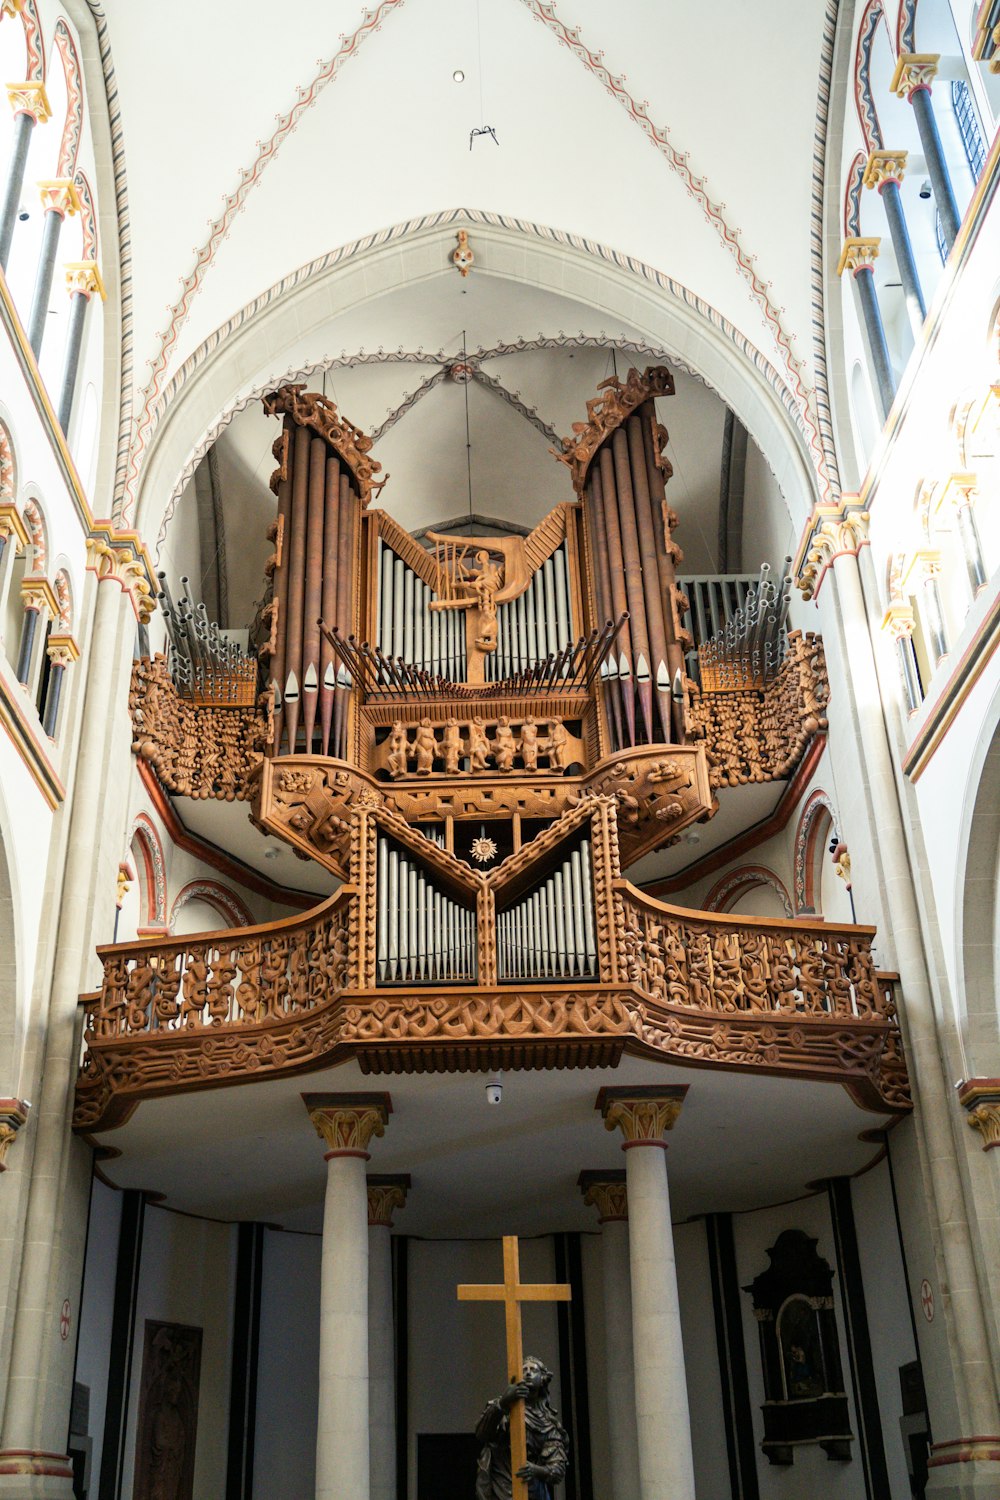 un grande organo a canne di legno in una chiesa